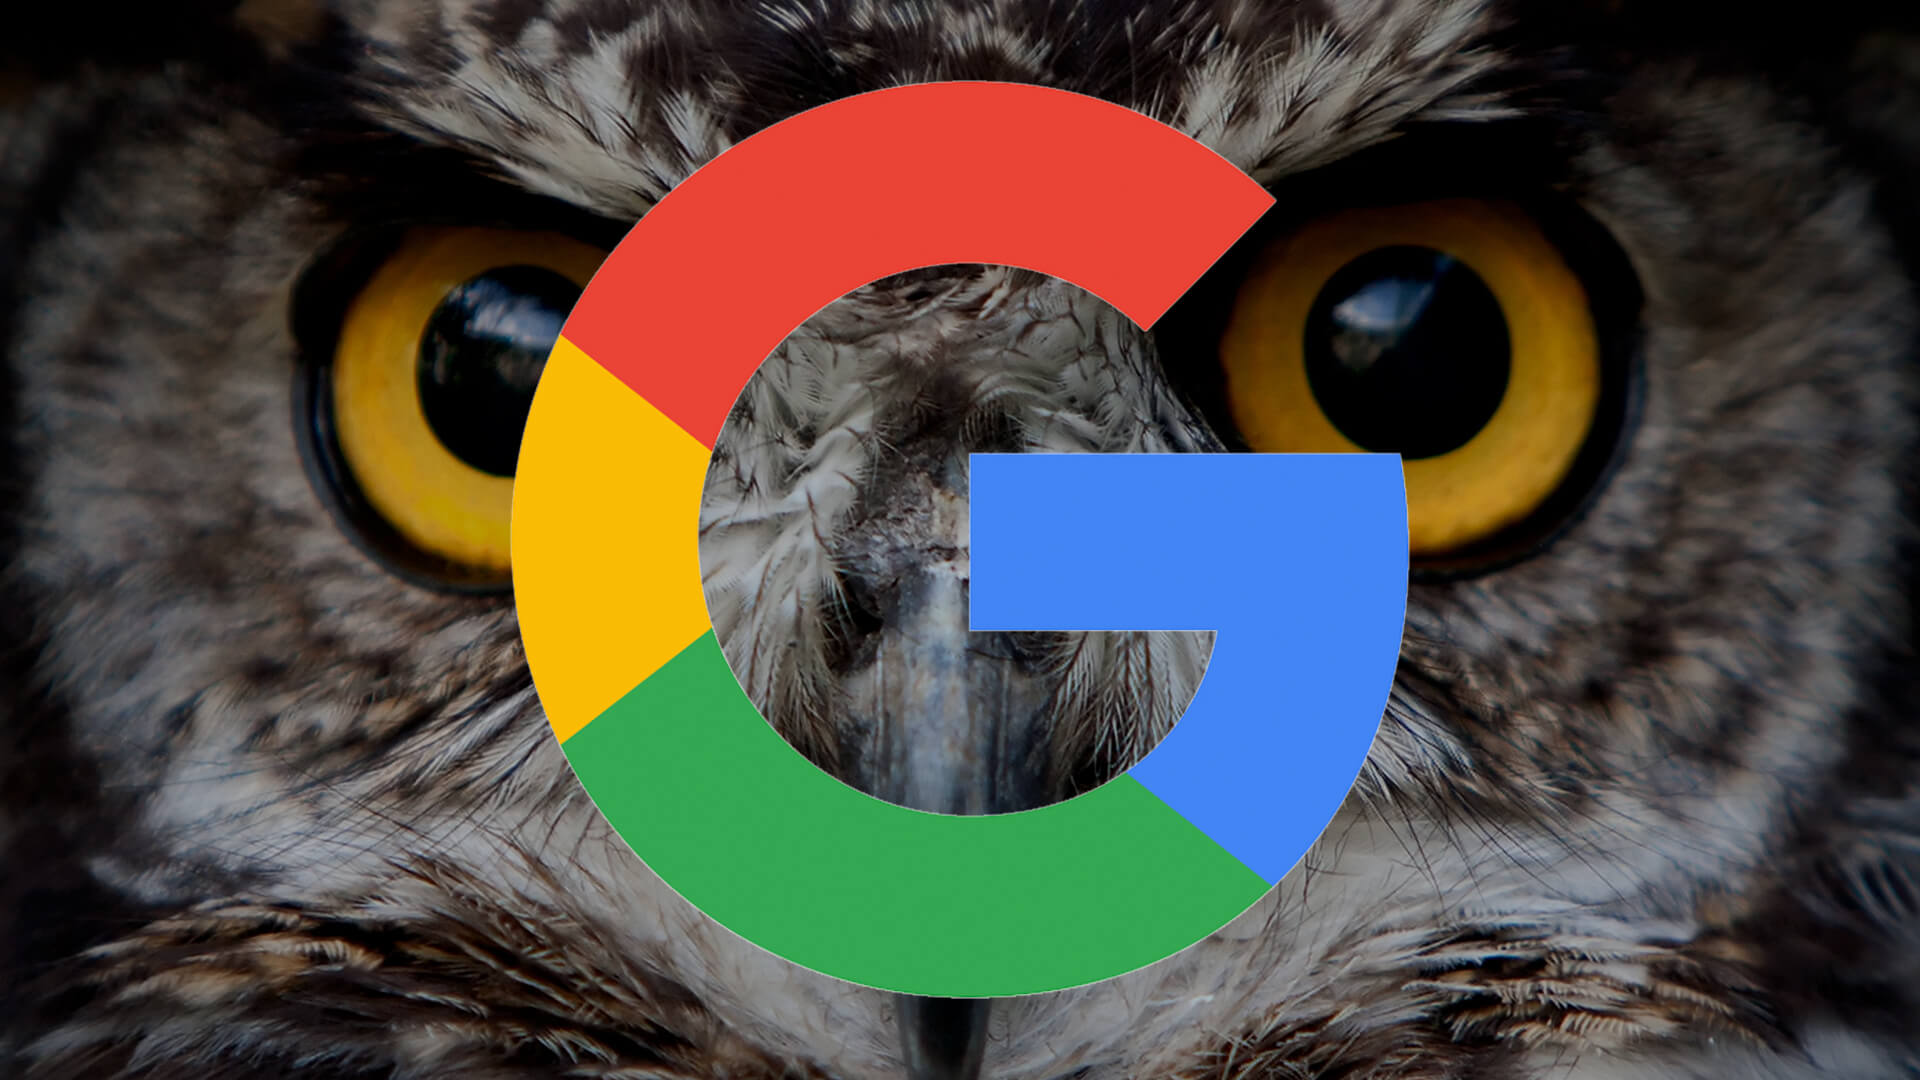 Project Terbaru Google - Project Google Owl